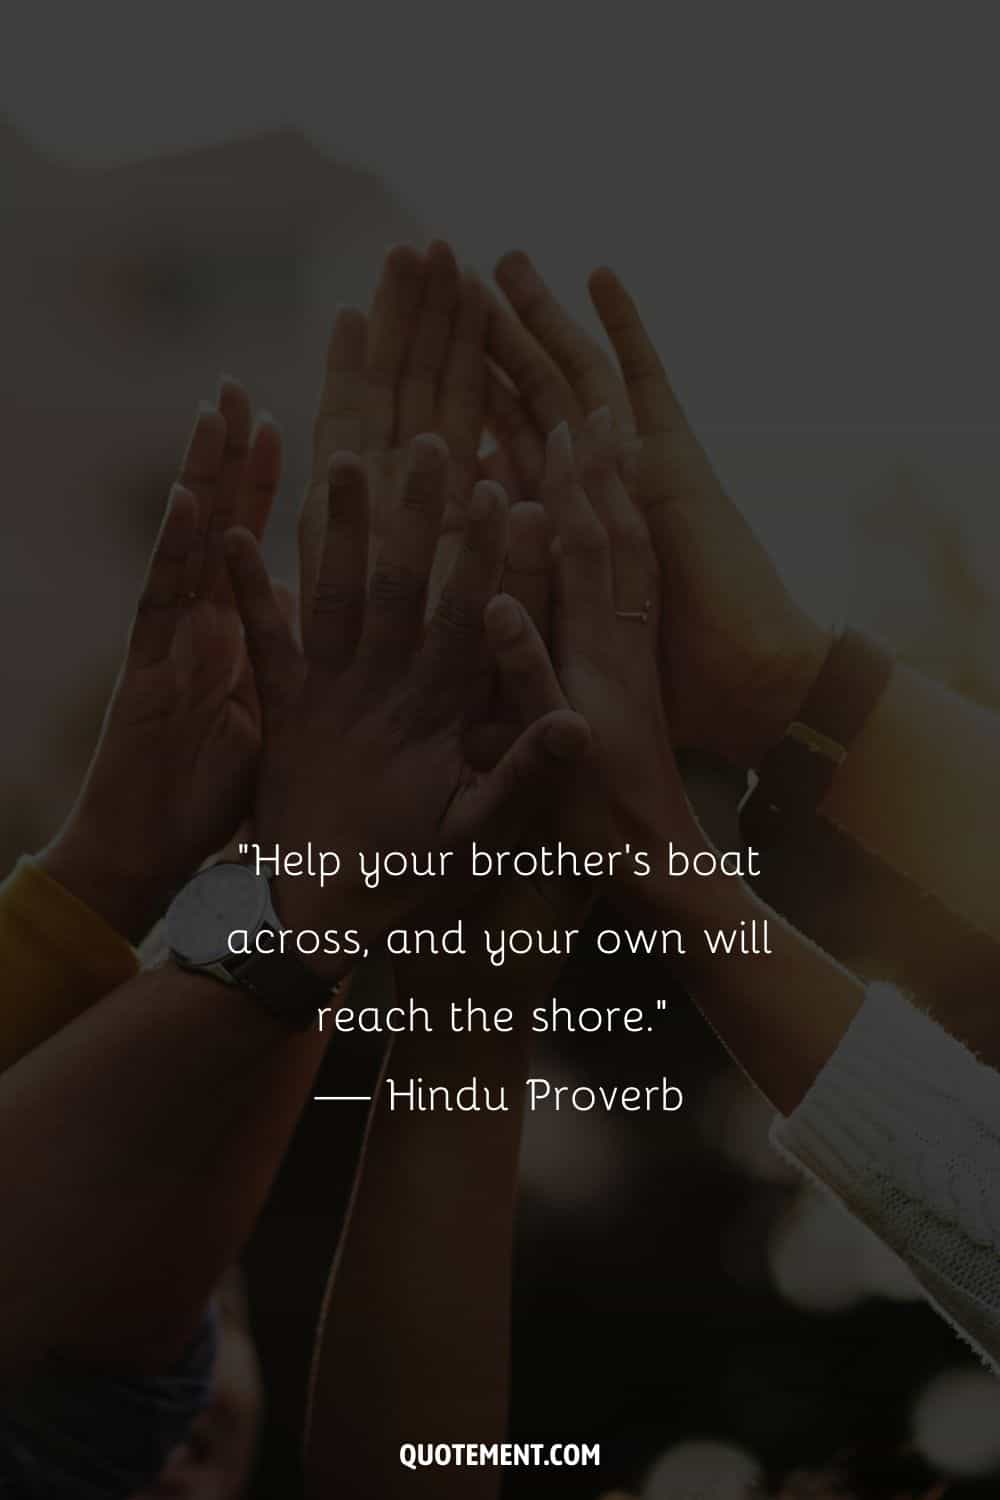 hands united image representing short quotation on brotherhood